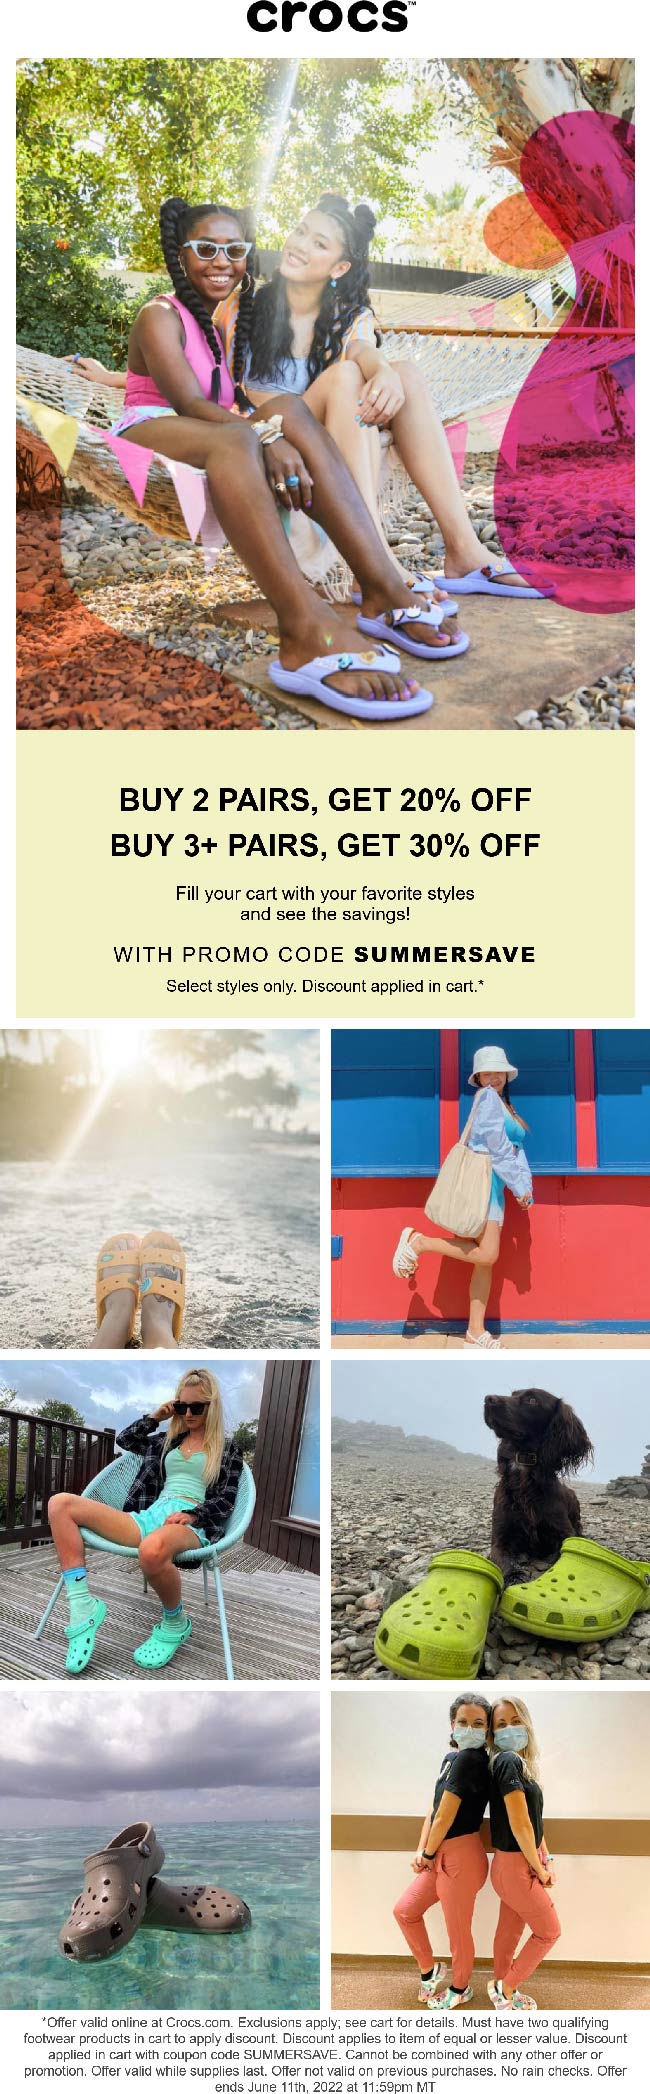 Crocs stores Coupon  20-30% off 2+ pairs online today at Crocs via promo code SUMMERSAVE #crocs 